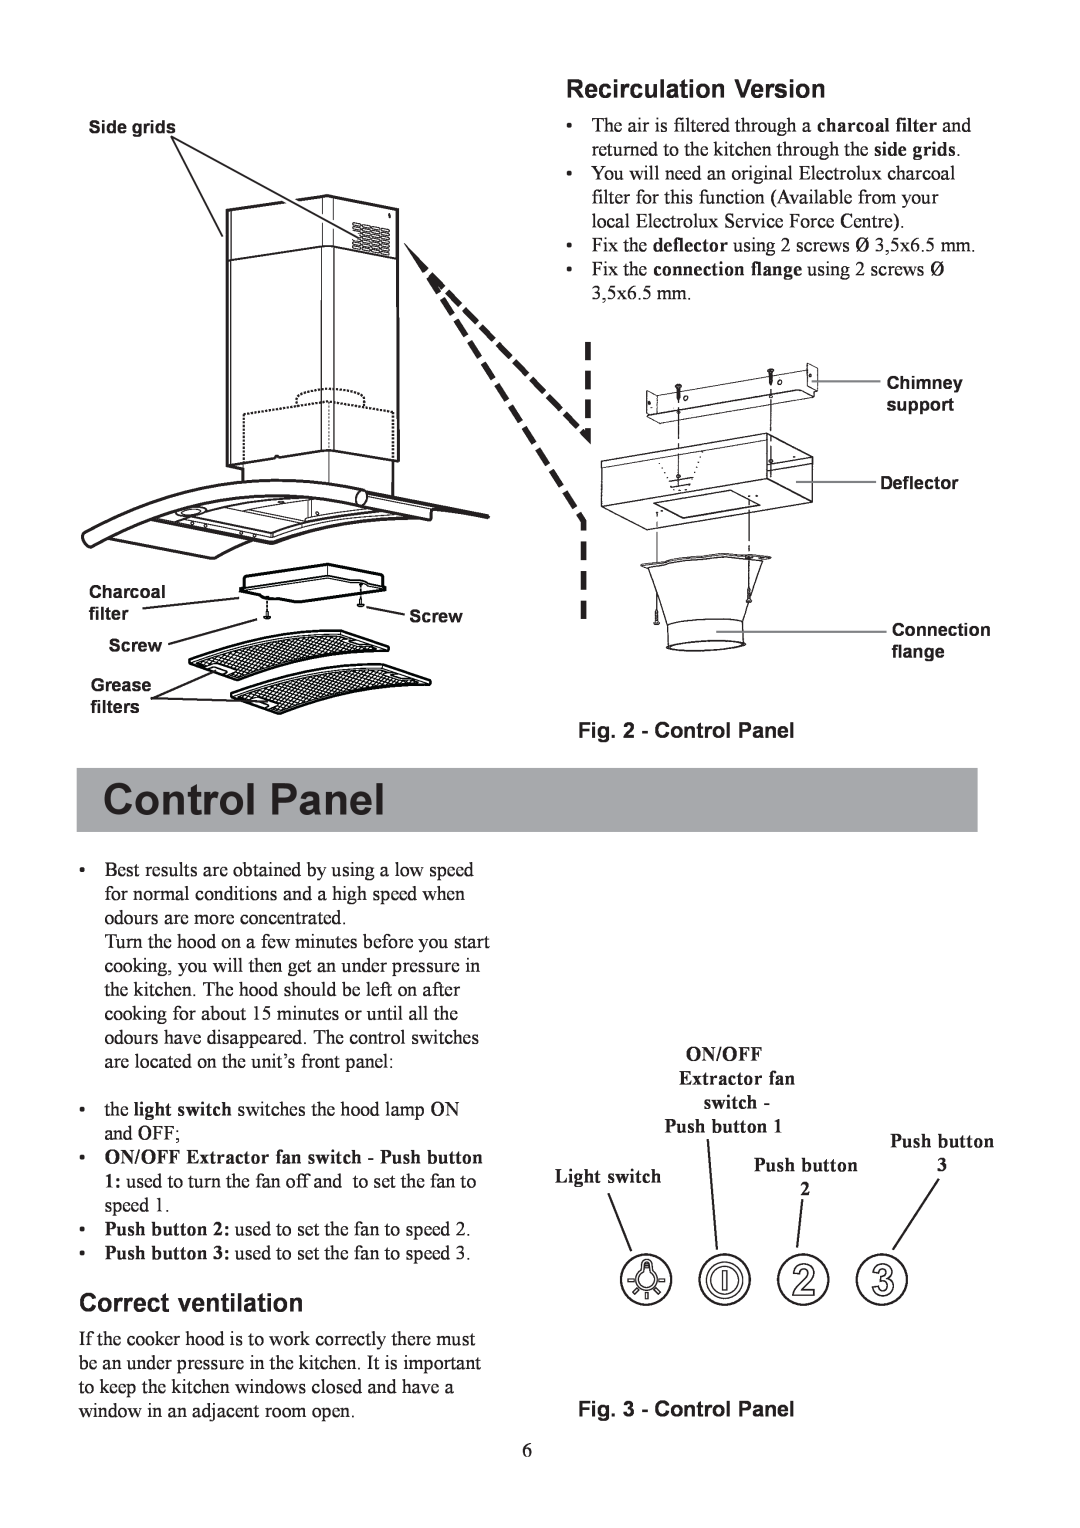 Electrolux CH 700 user manual Control Panel, Recirculation Version, Correct ventilation 